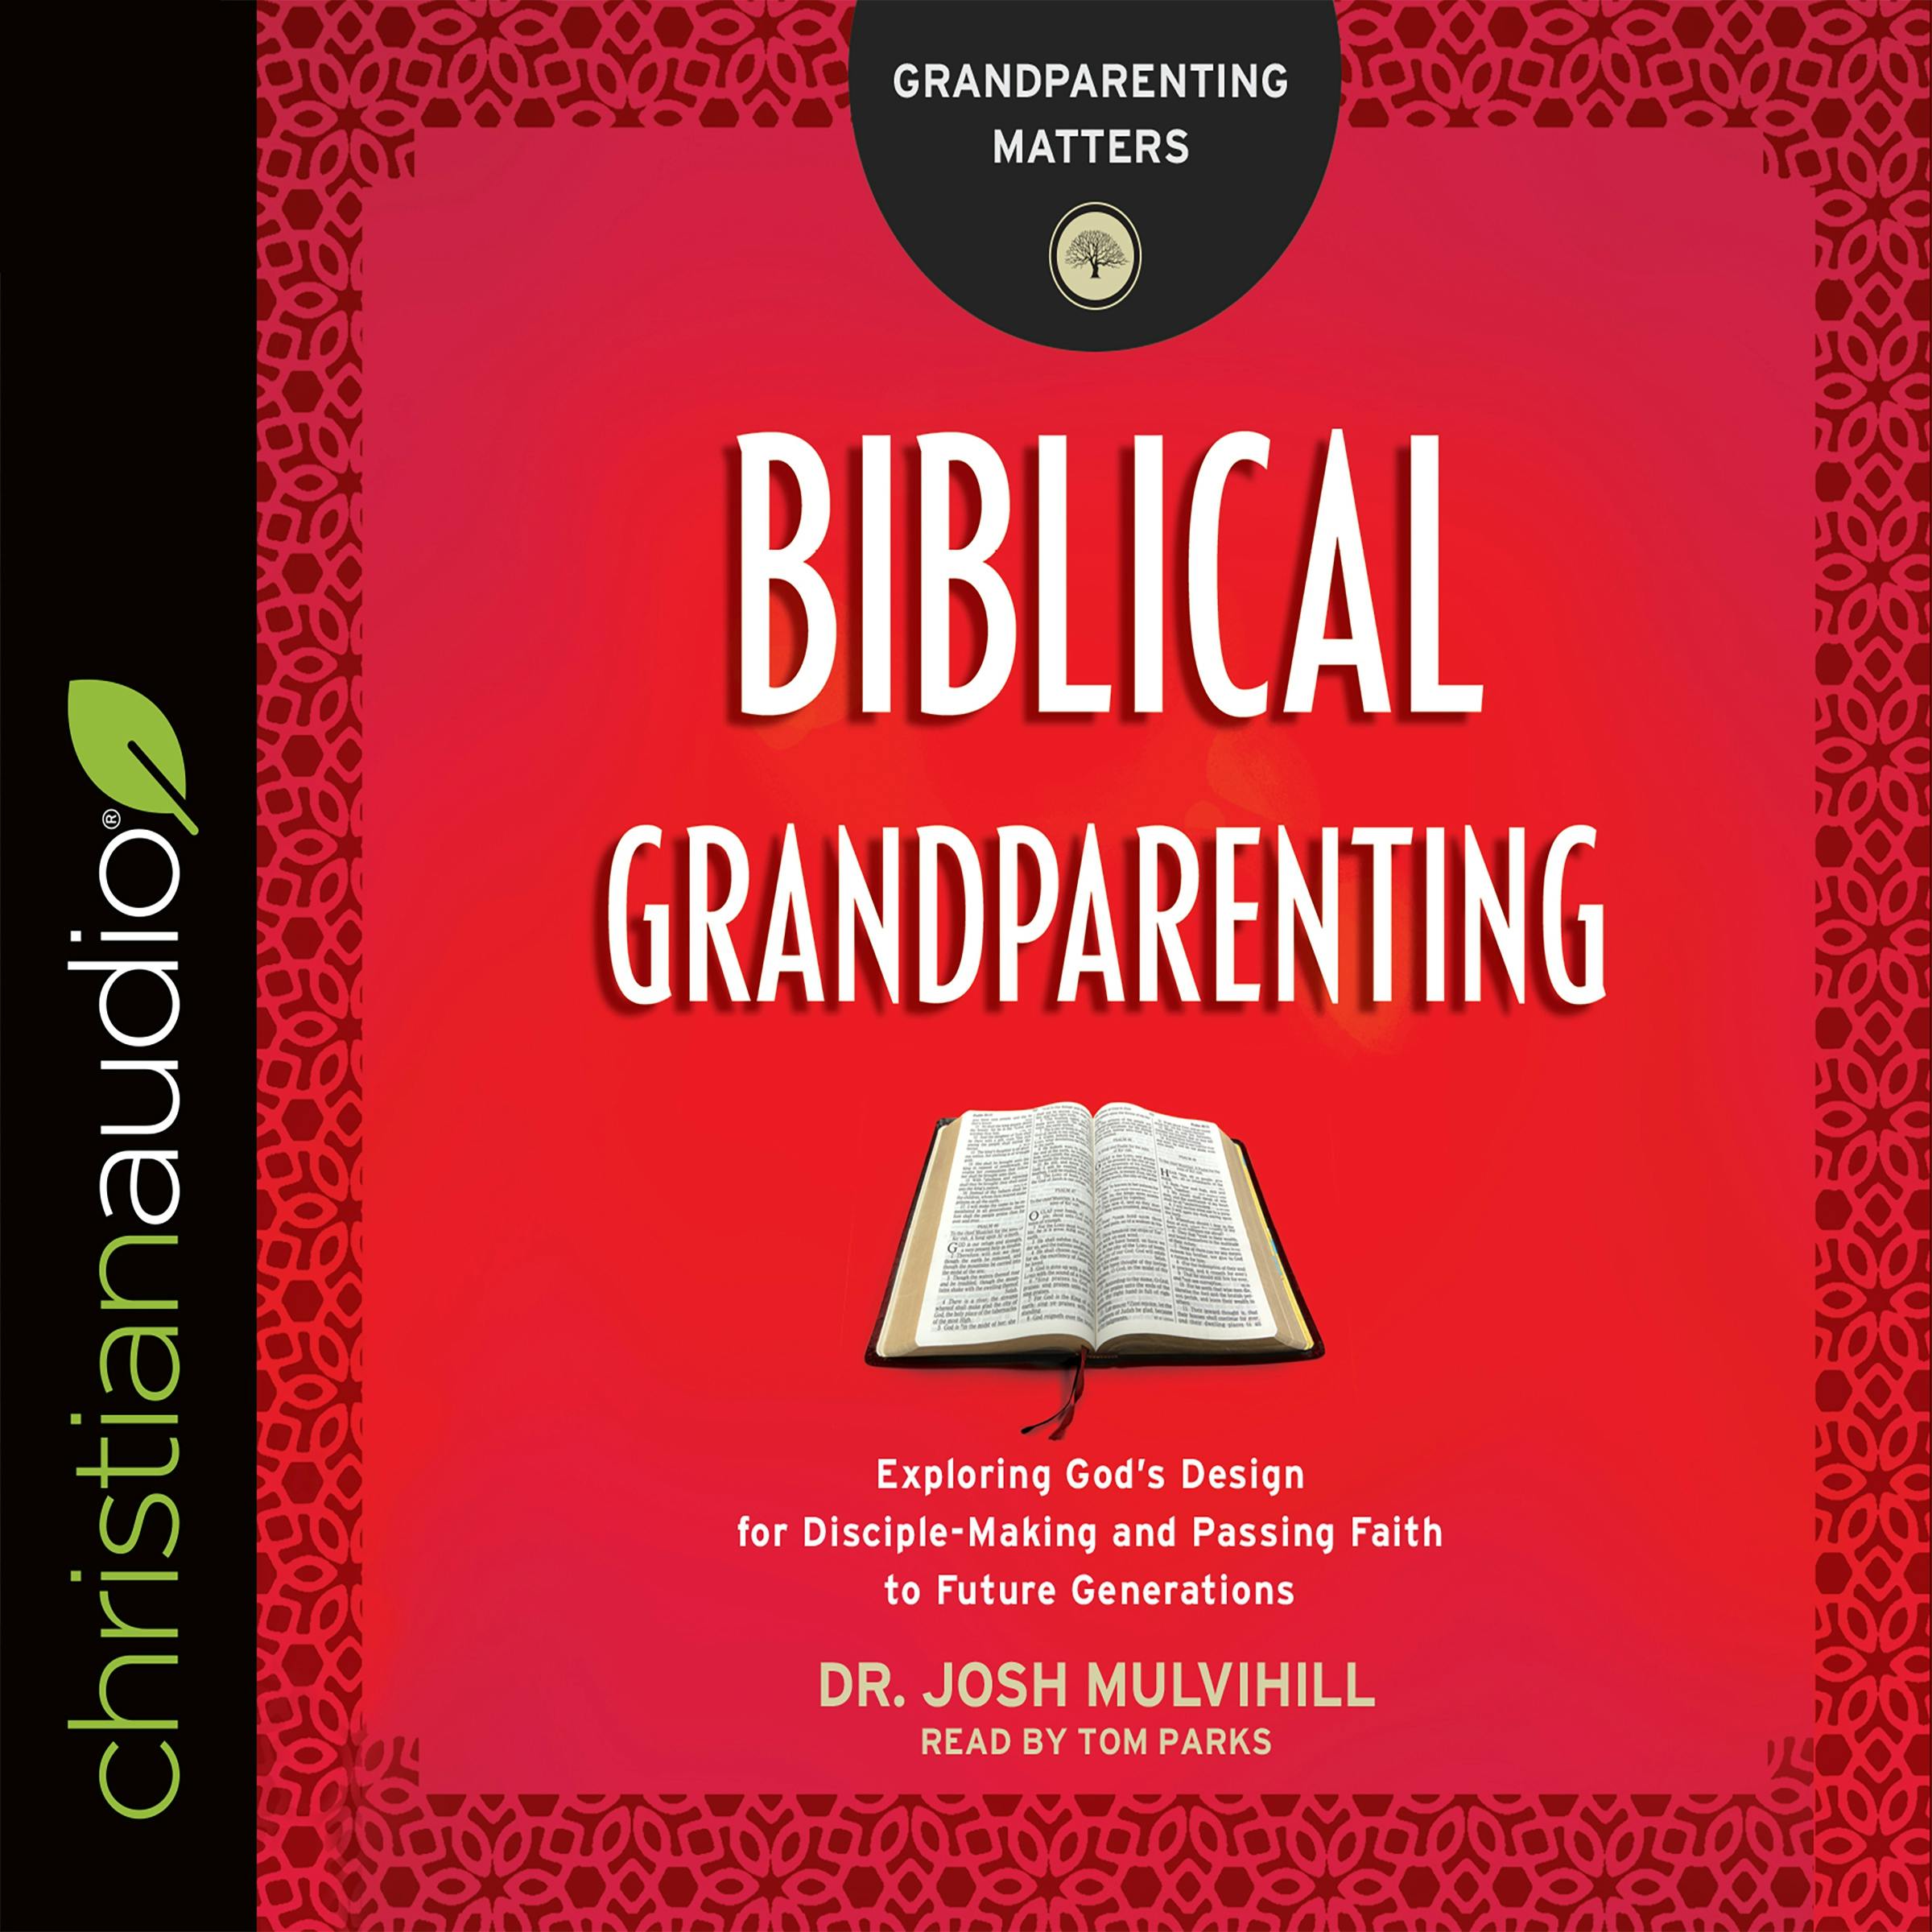 Biblical Grandparenting: Exploring God's Design for Disciple-Making and Passing Faith to Future Generations - Dr. Josh Mulvihill